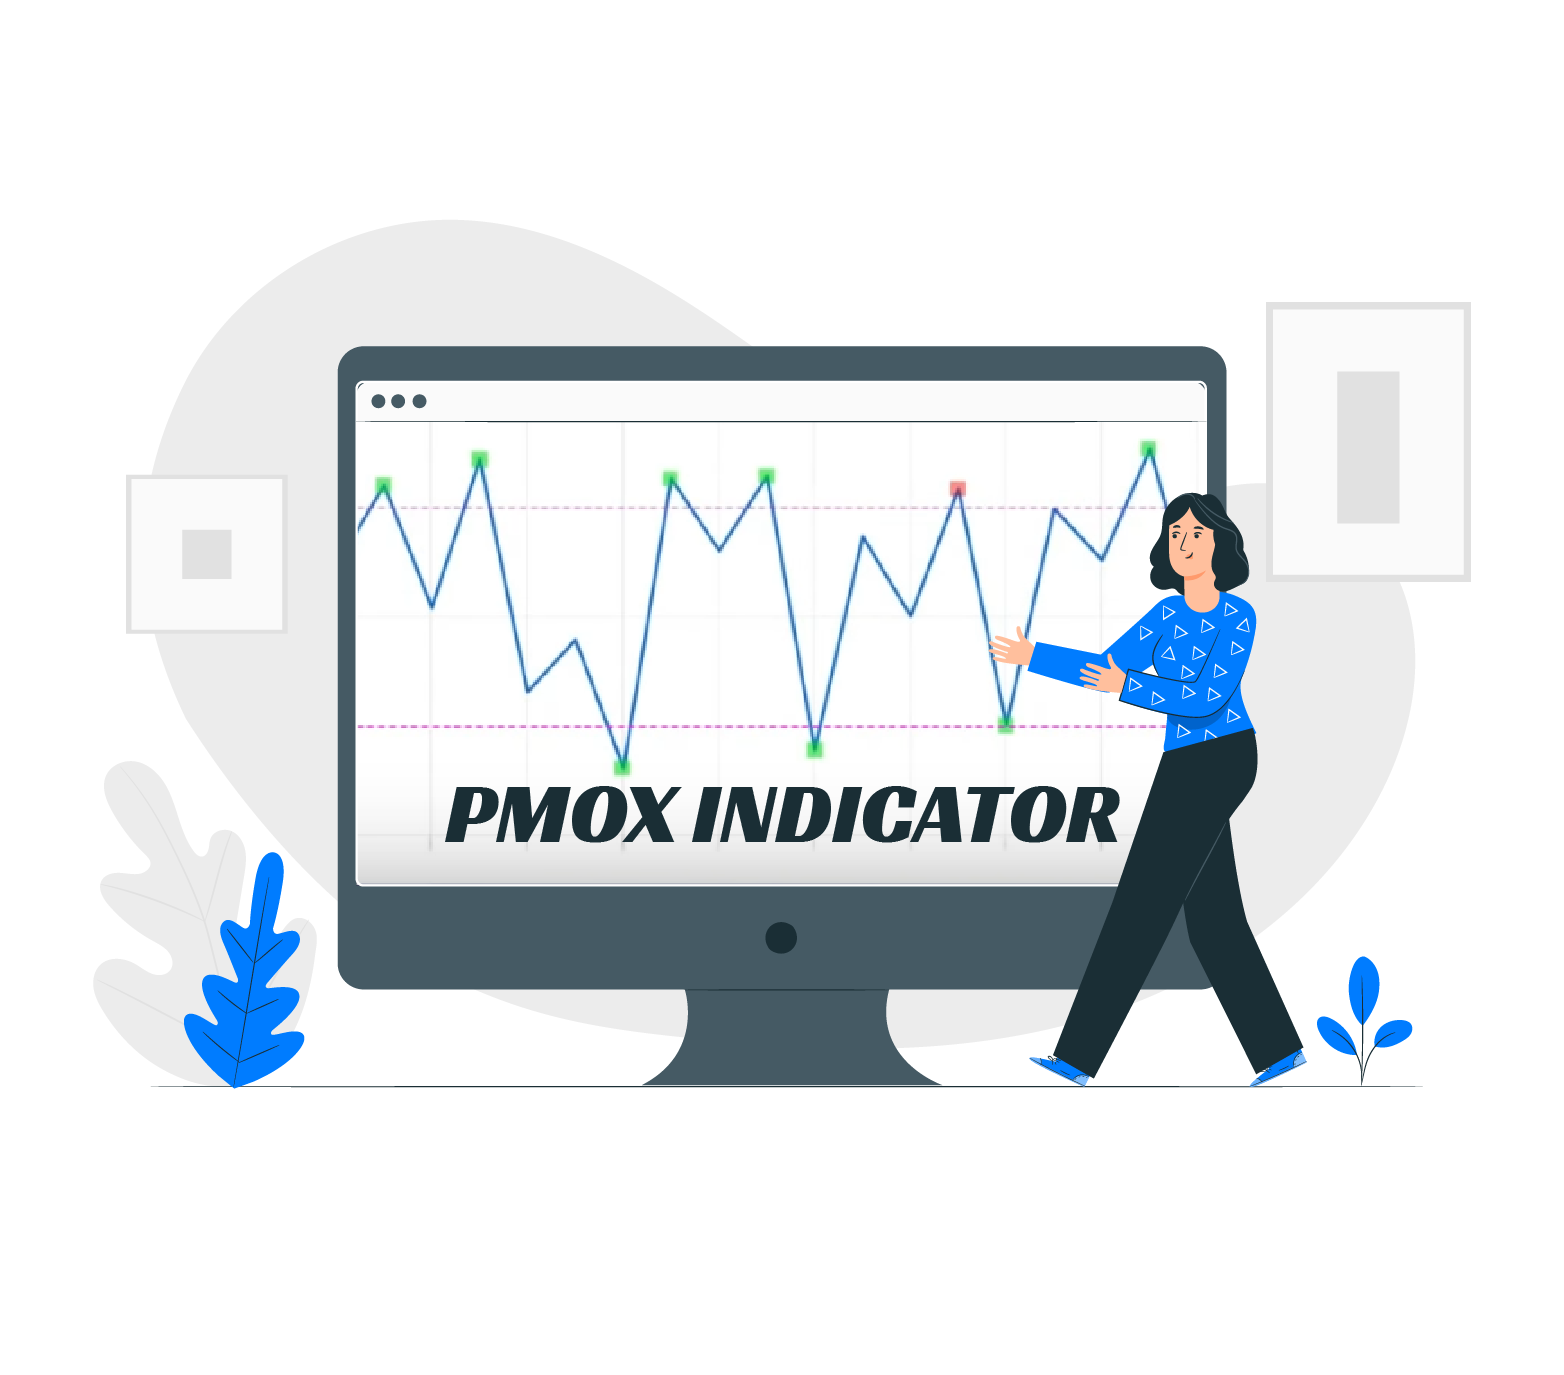 PMOX Indicator